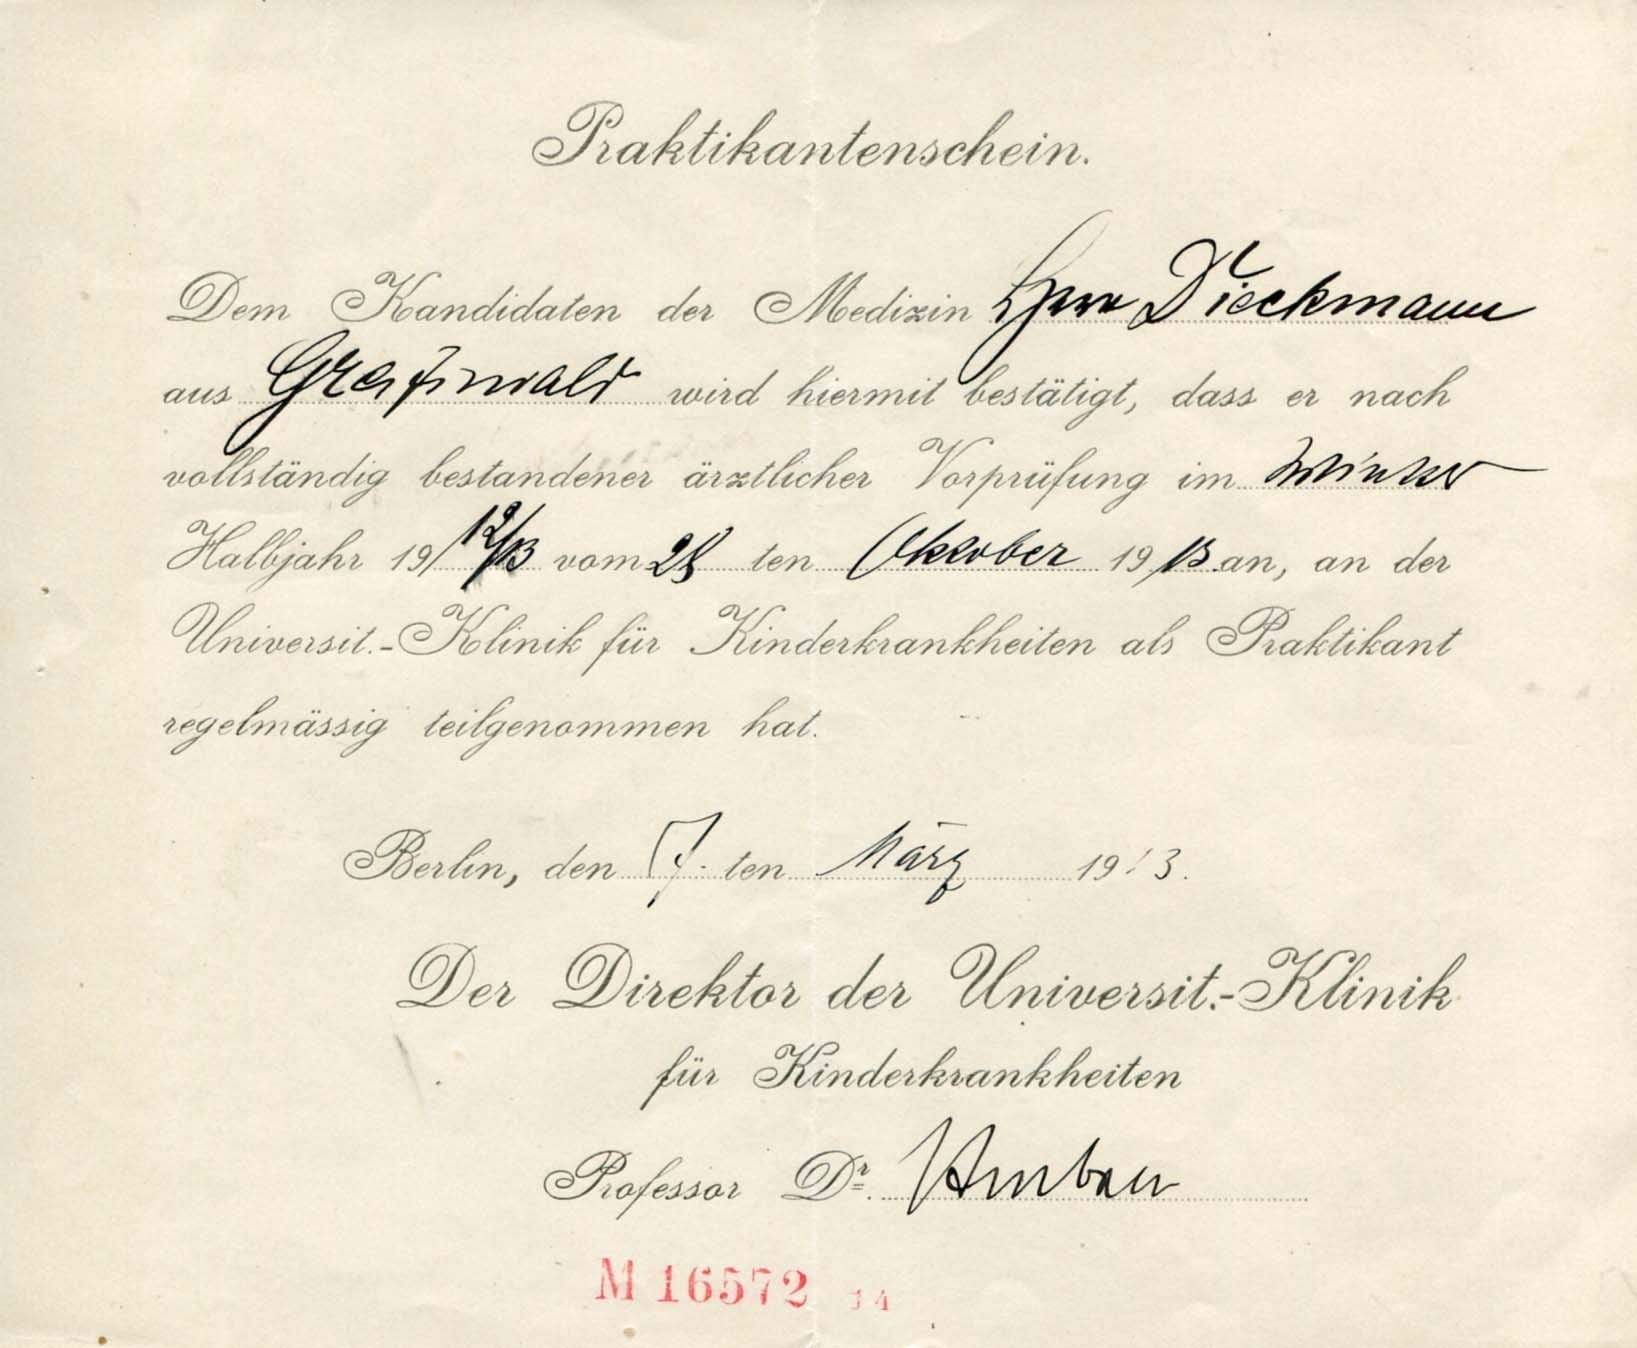 Heubner, Otto autograph